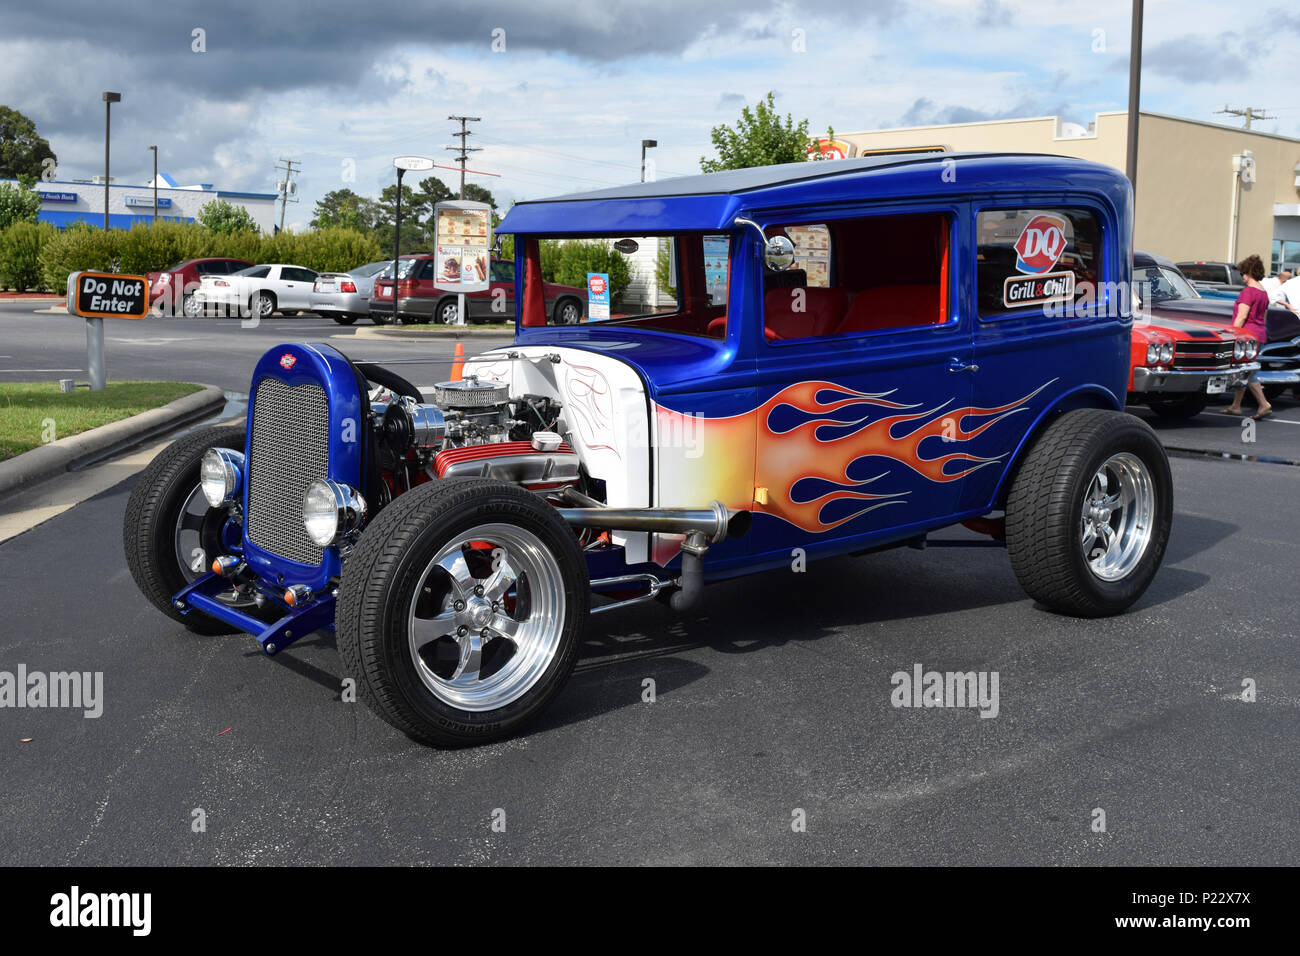 A custom Hot Rod car at a Car Show. Stock Photo